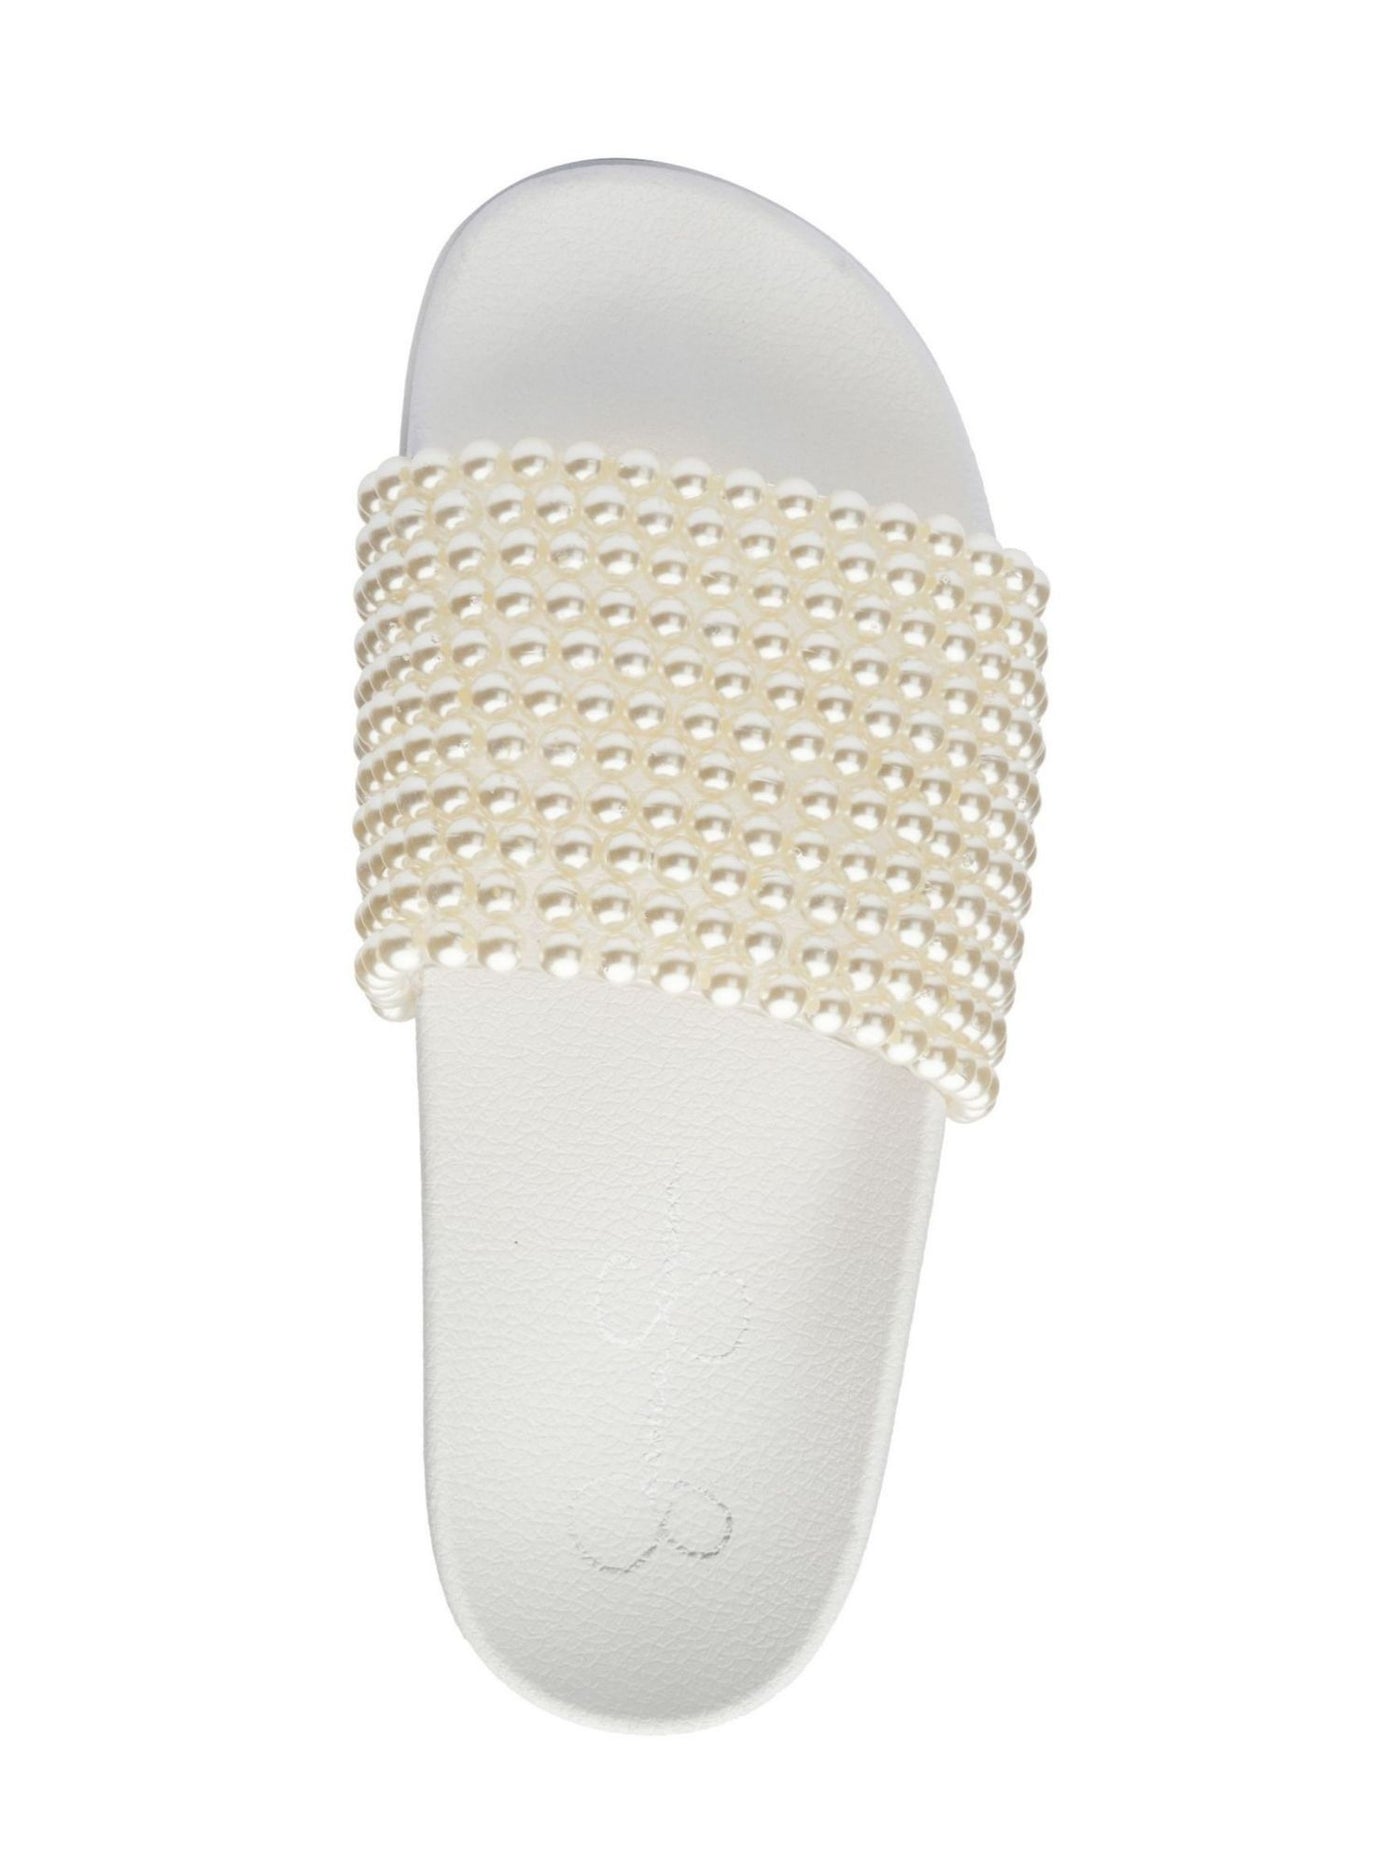 JESSICA SIMPSON Womens Ivory Pool Slide Beaded Saycie Round Toe Slip On Slide Sandals Shoes M